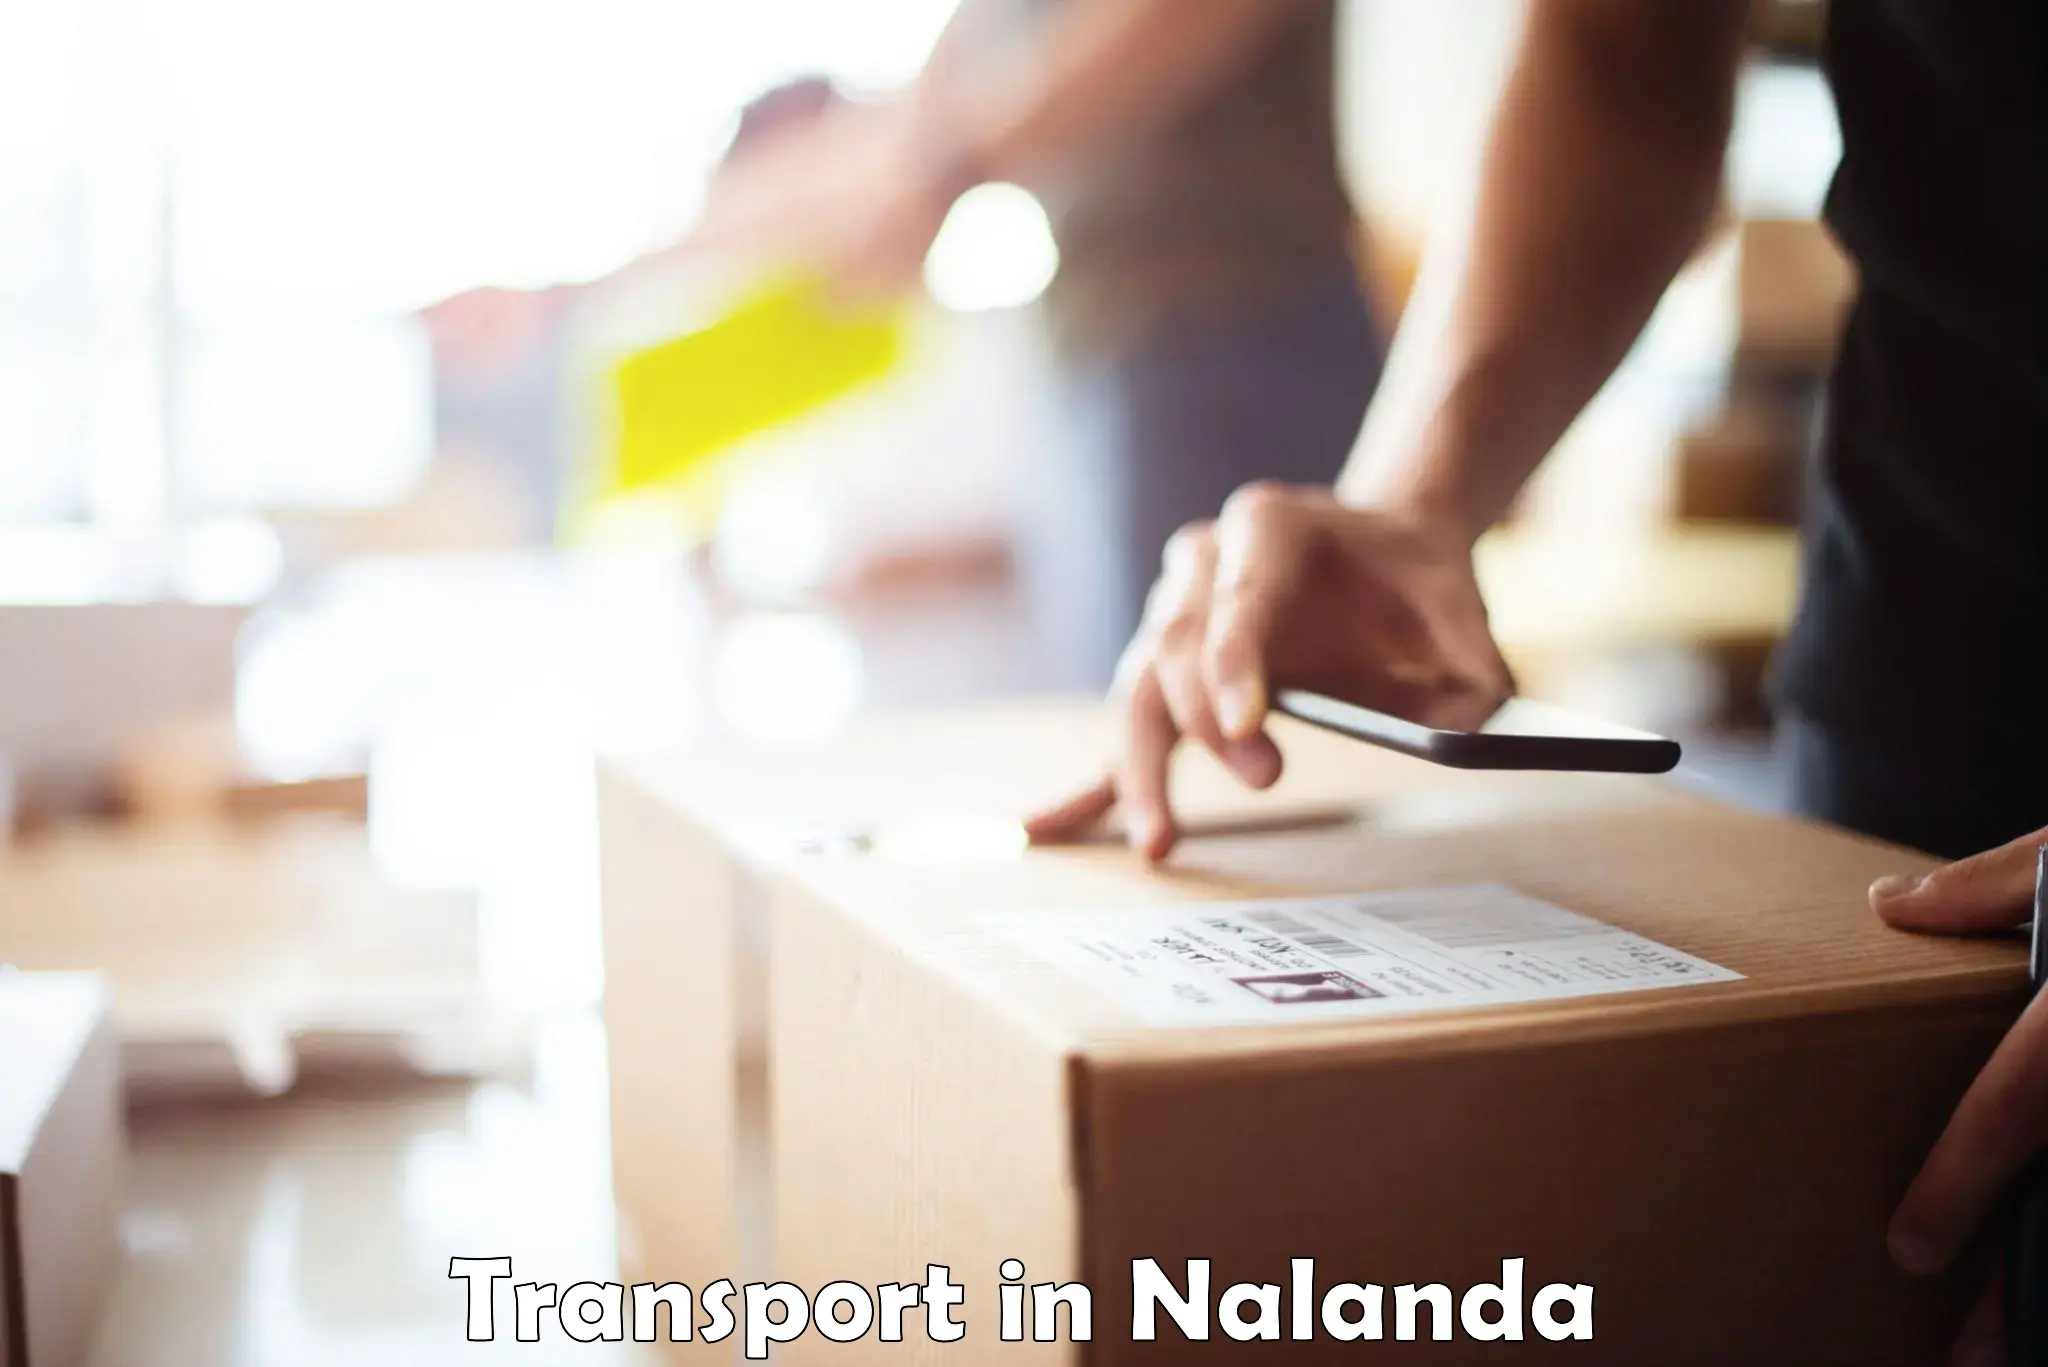 Interstate goods transport in Nalanda